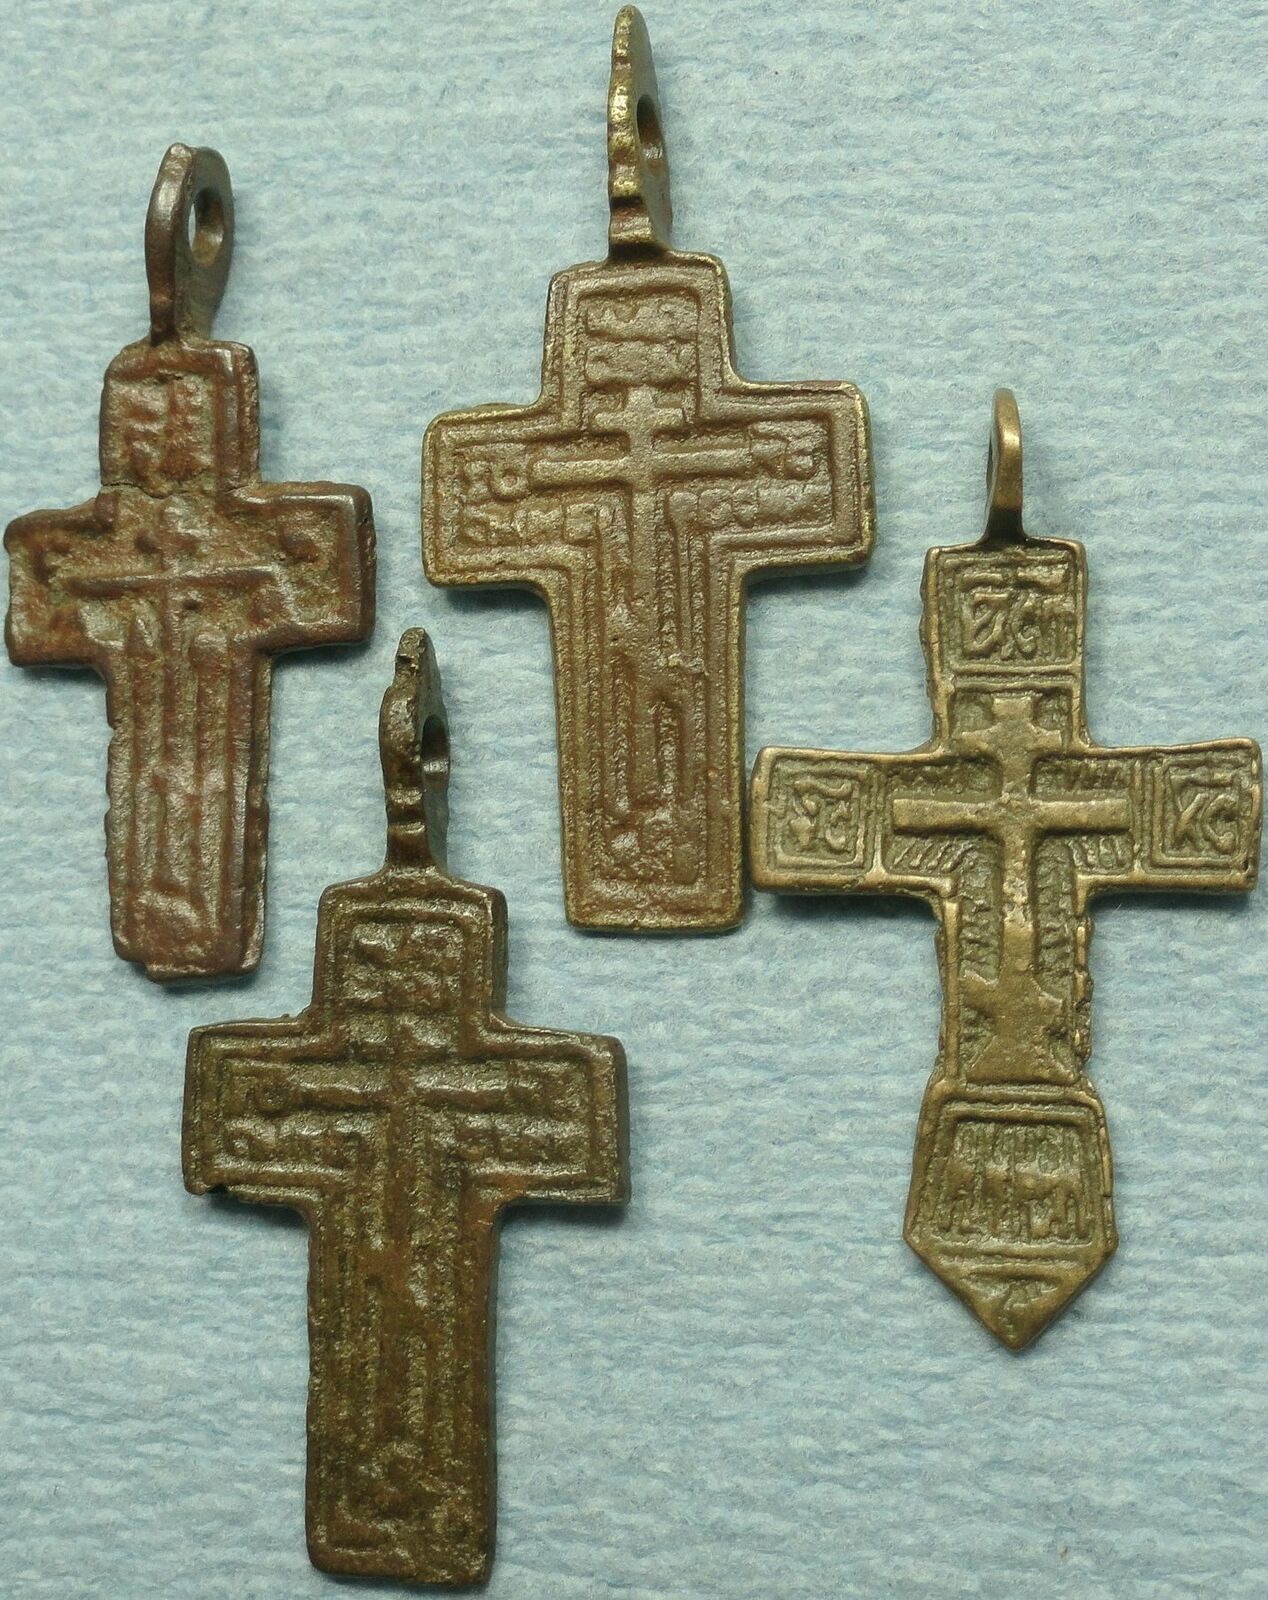 ONE 17th - 18th c. Ukrainian Orthodox Bronze Cross Pendant, Text